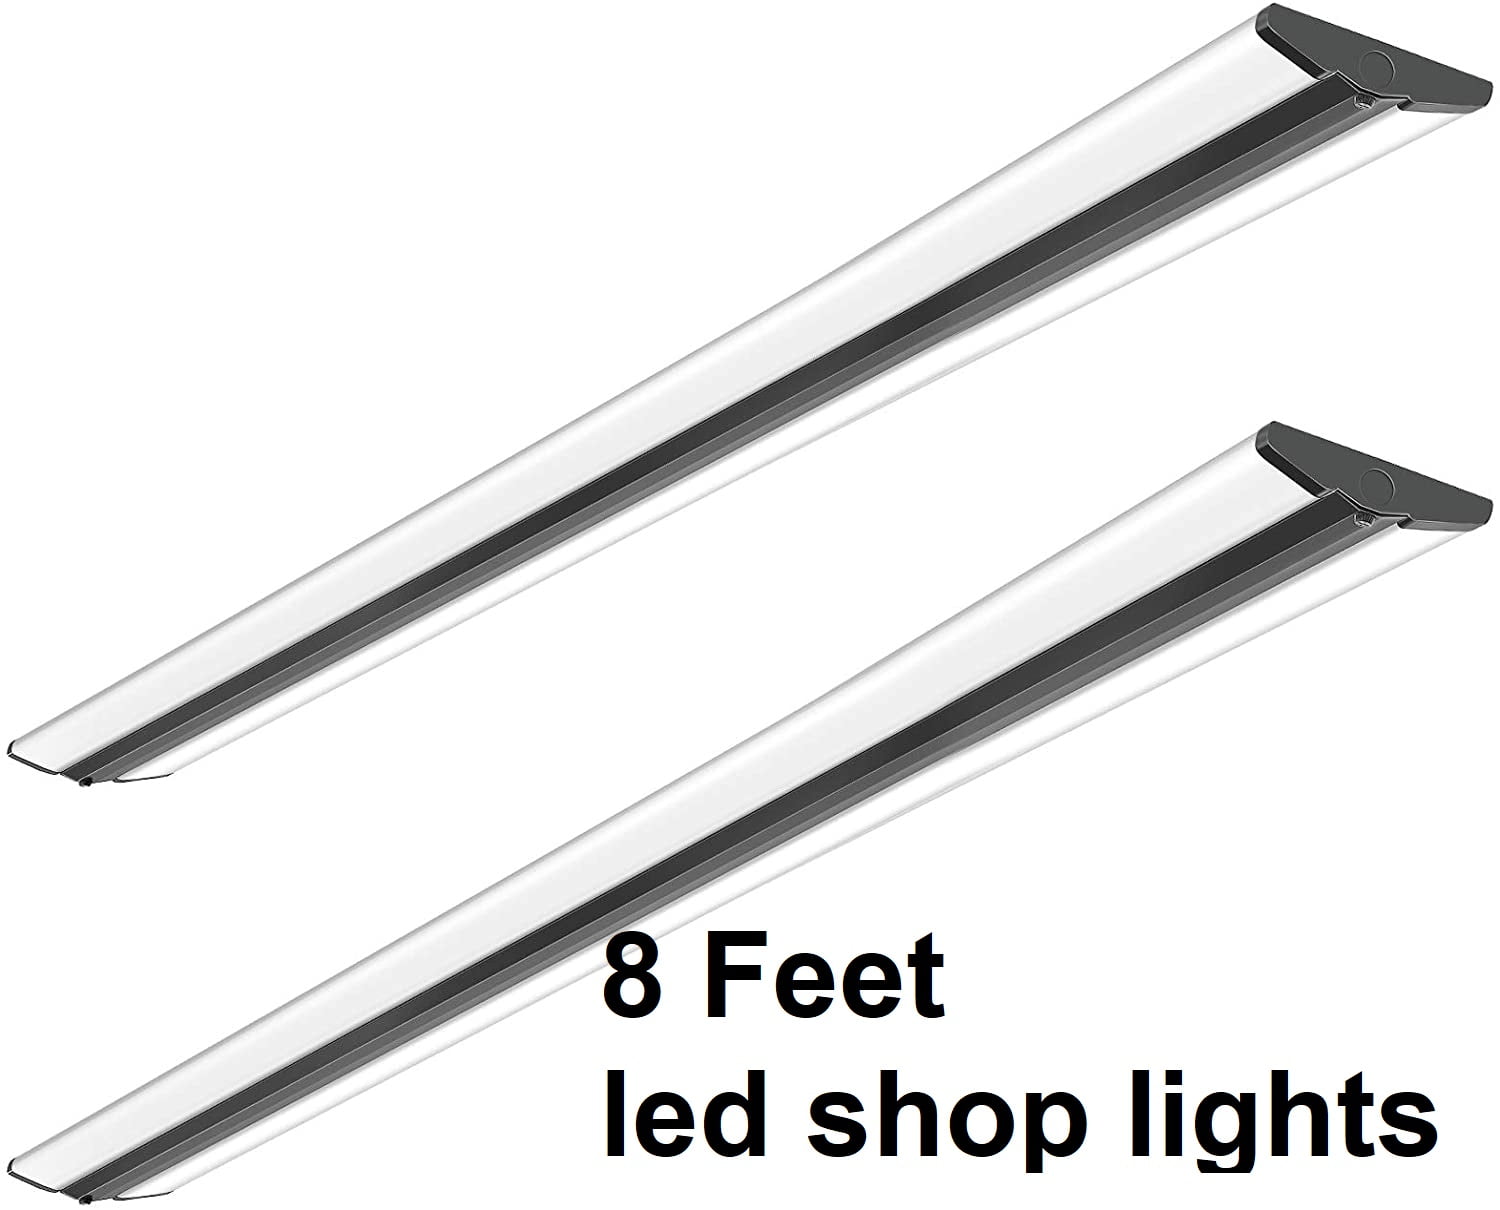 8 feet led shop lights